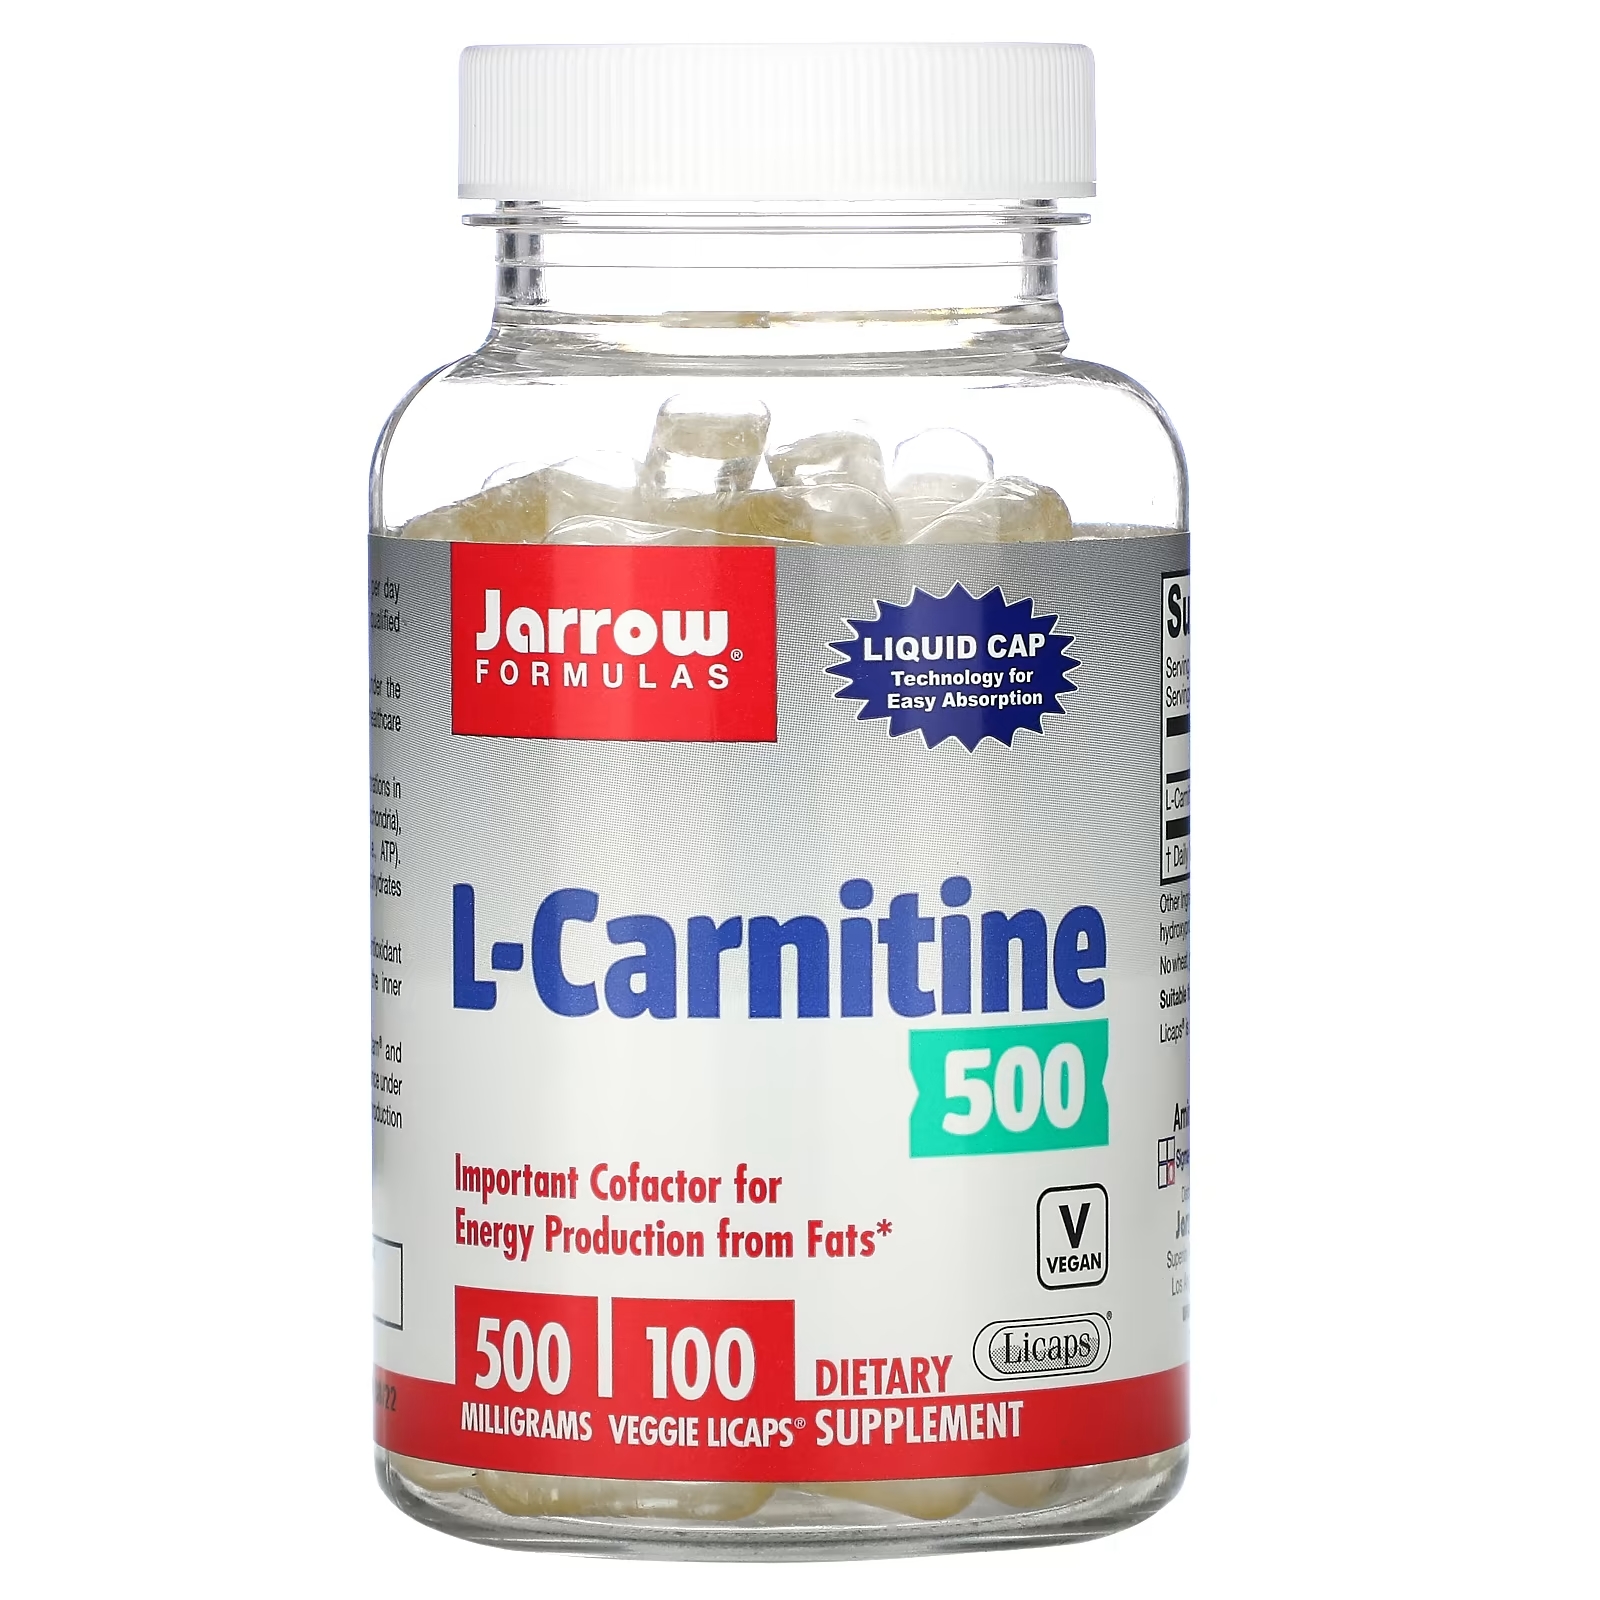 Jarrow Formulas L-карнитин 500 500 мг, 100 вегетарианских капсул Licaps